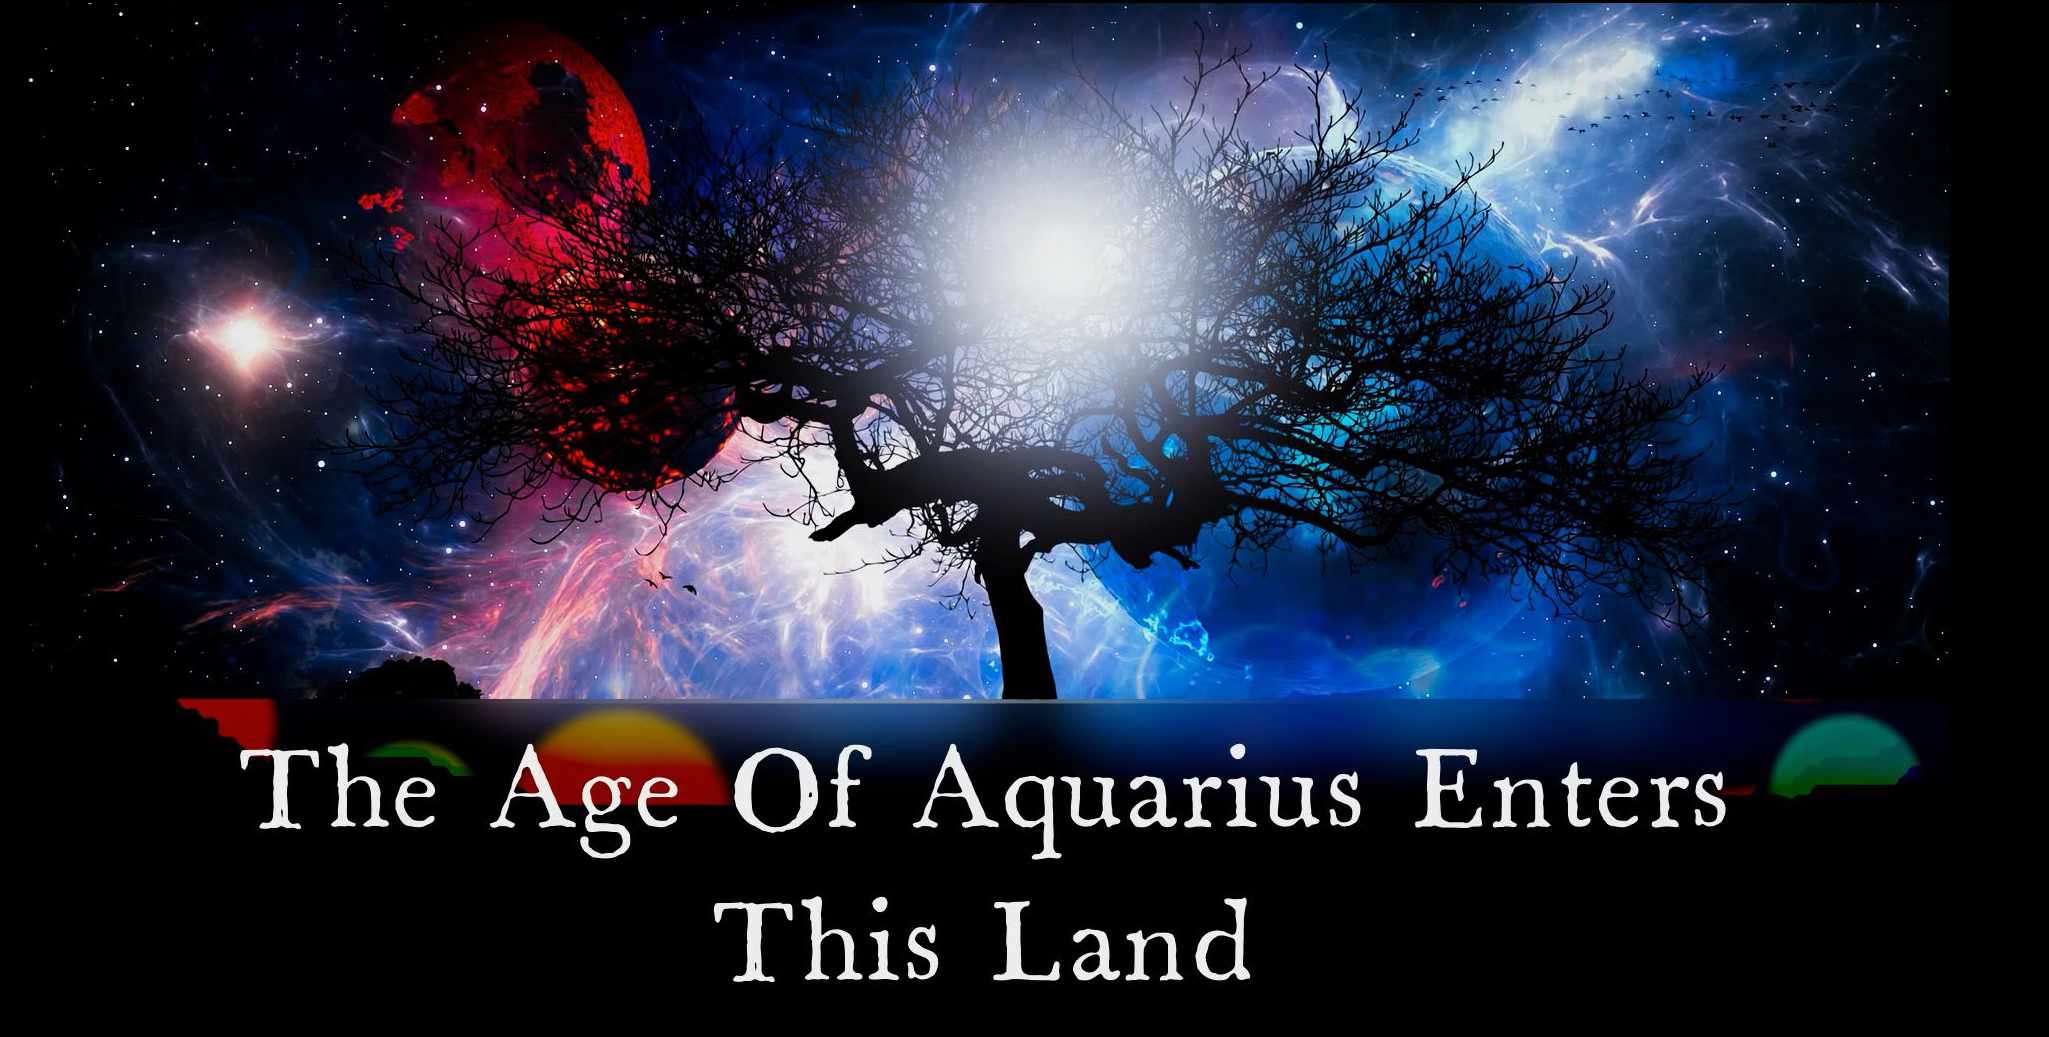 The Age Of Aquarius Enters This Land